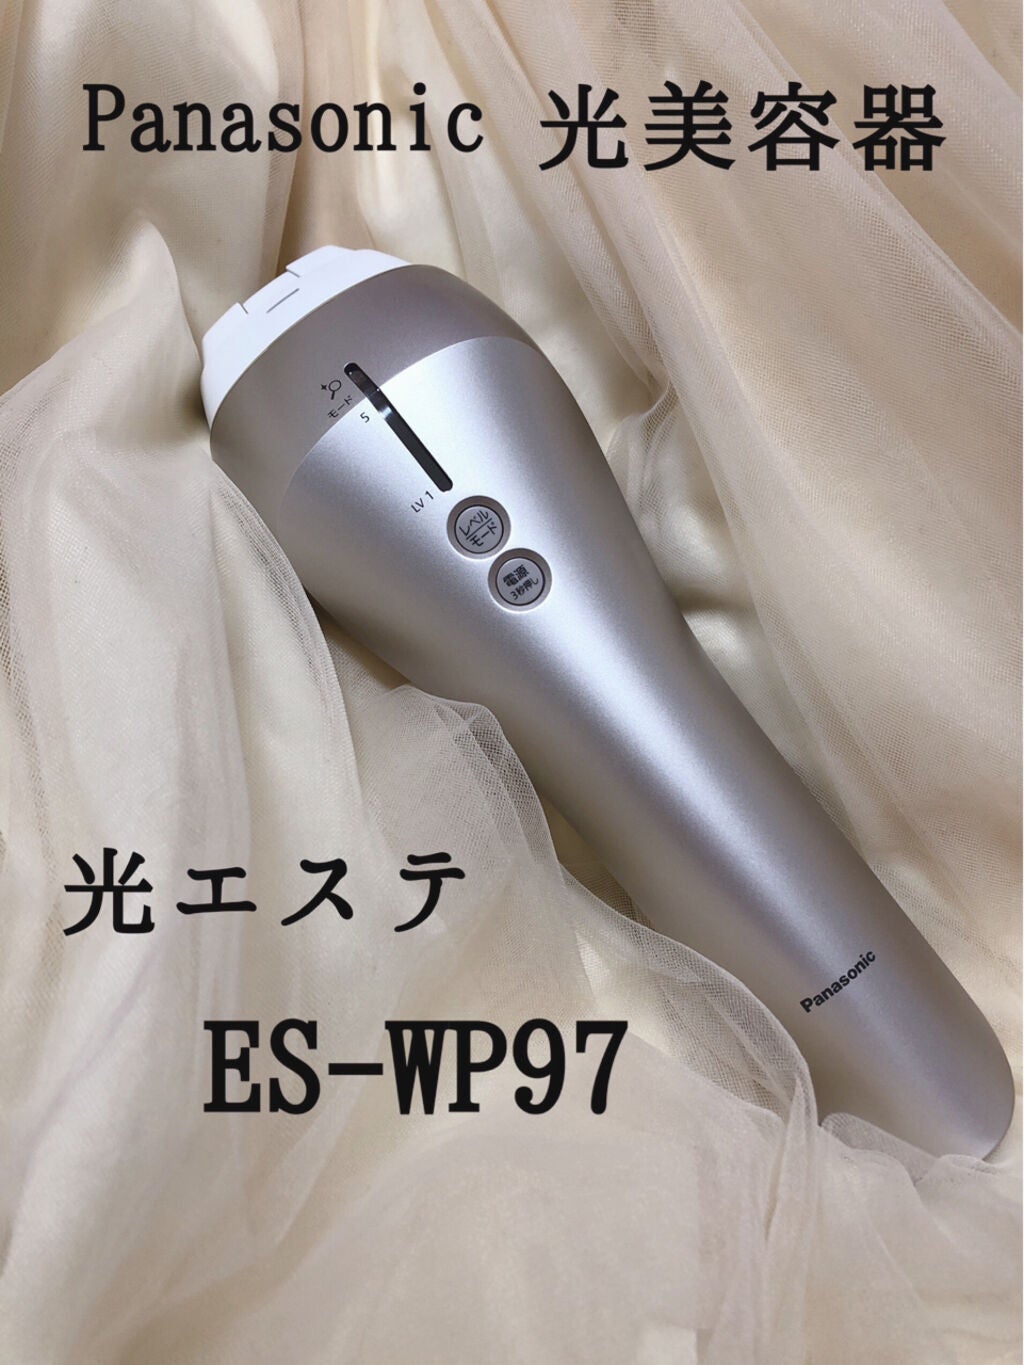 Panasonic 光美容器 光エステ ES-WP97-N ゴールド-